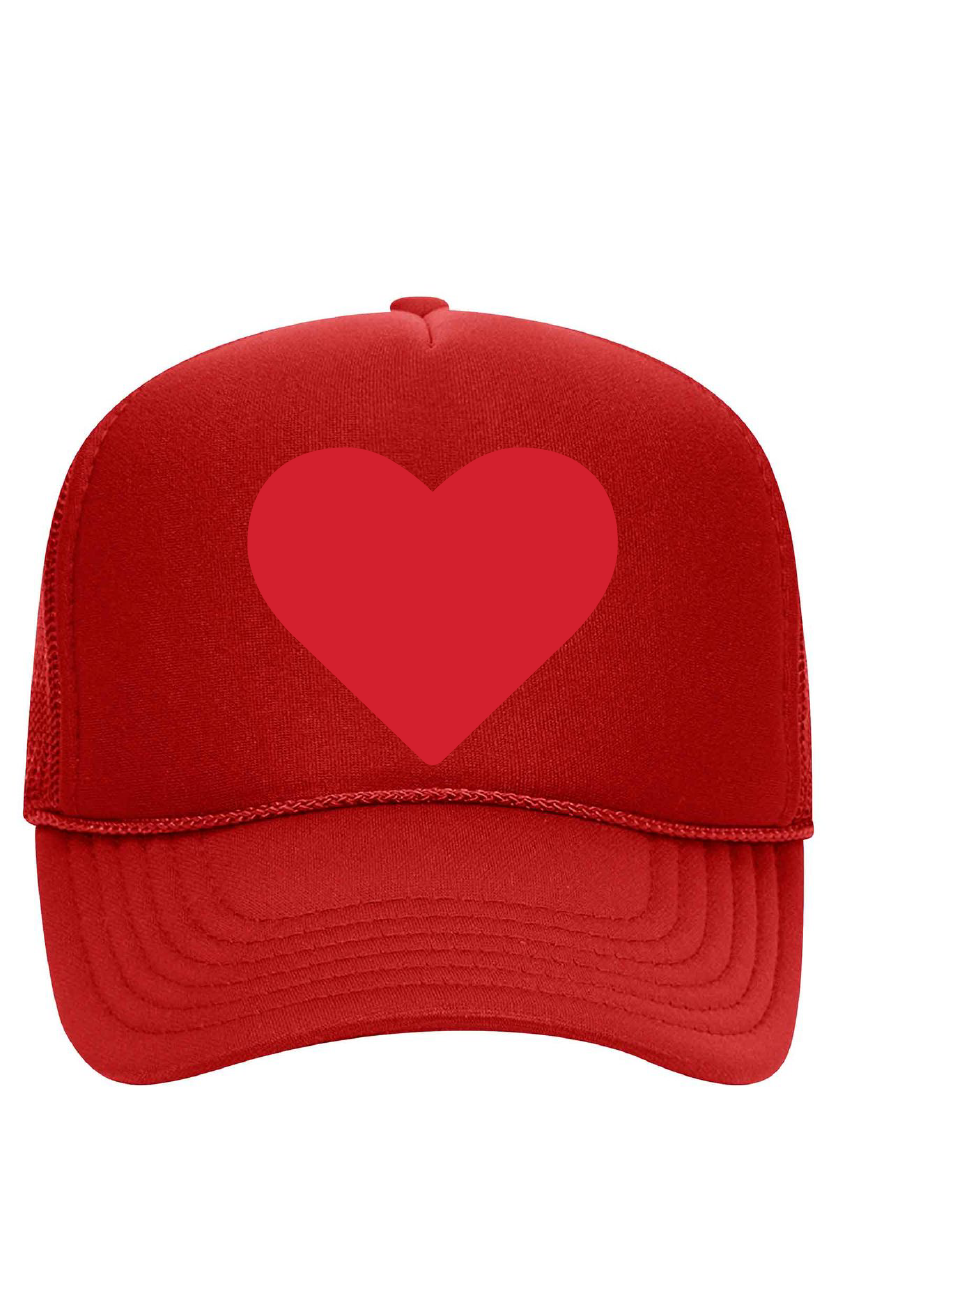 Heart / Foam Trucker Hat / 5 colors / Patriotic